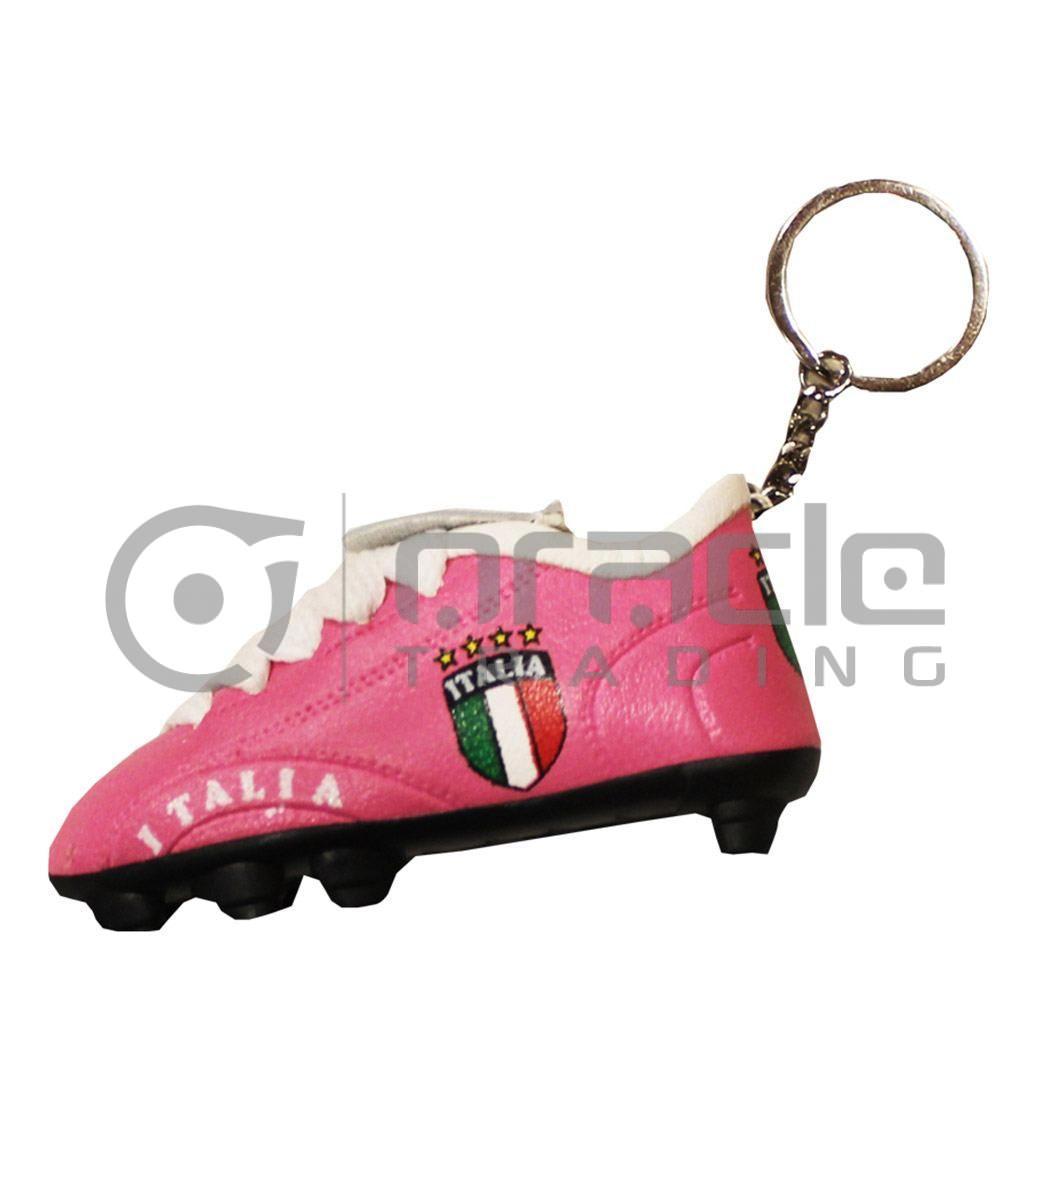 Italia Shoe Keychain 12-Pack (Pink)